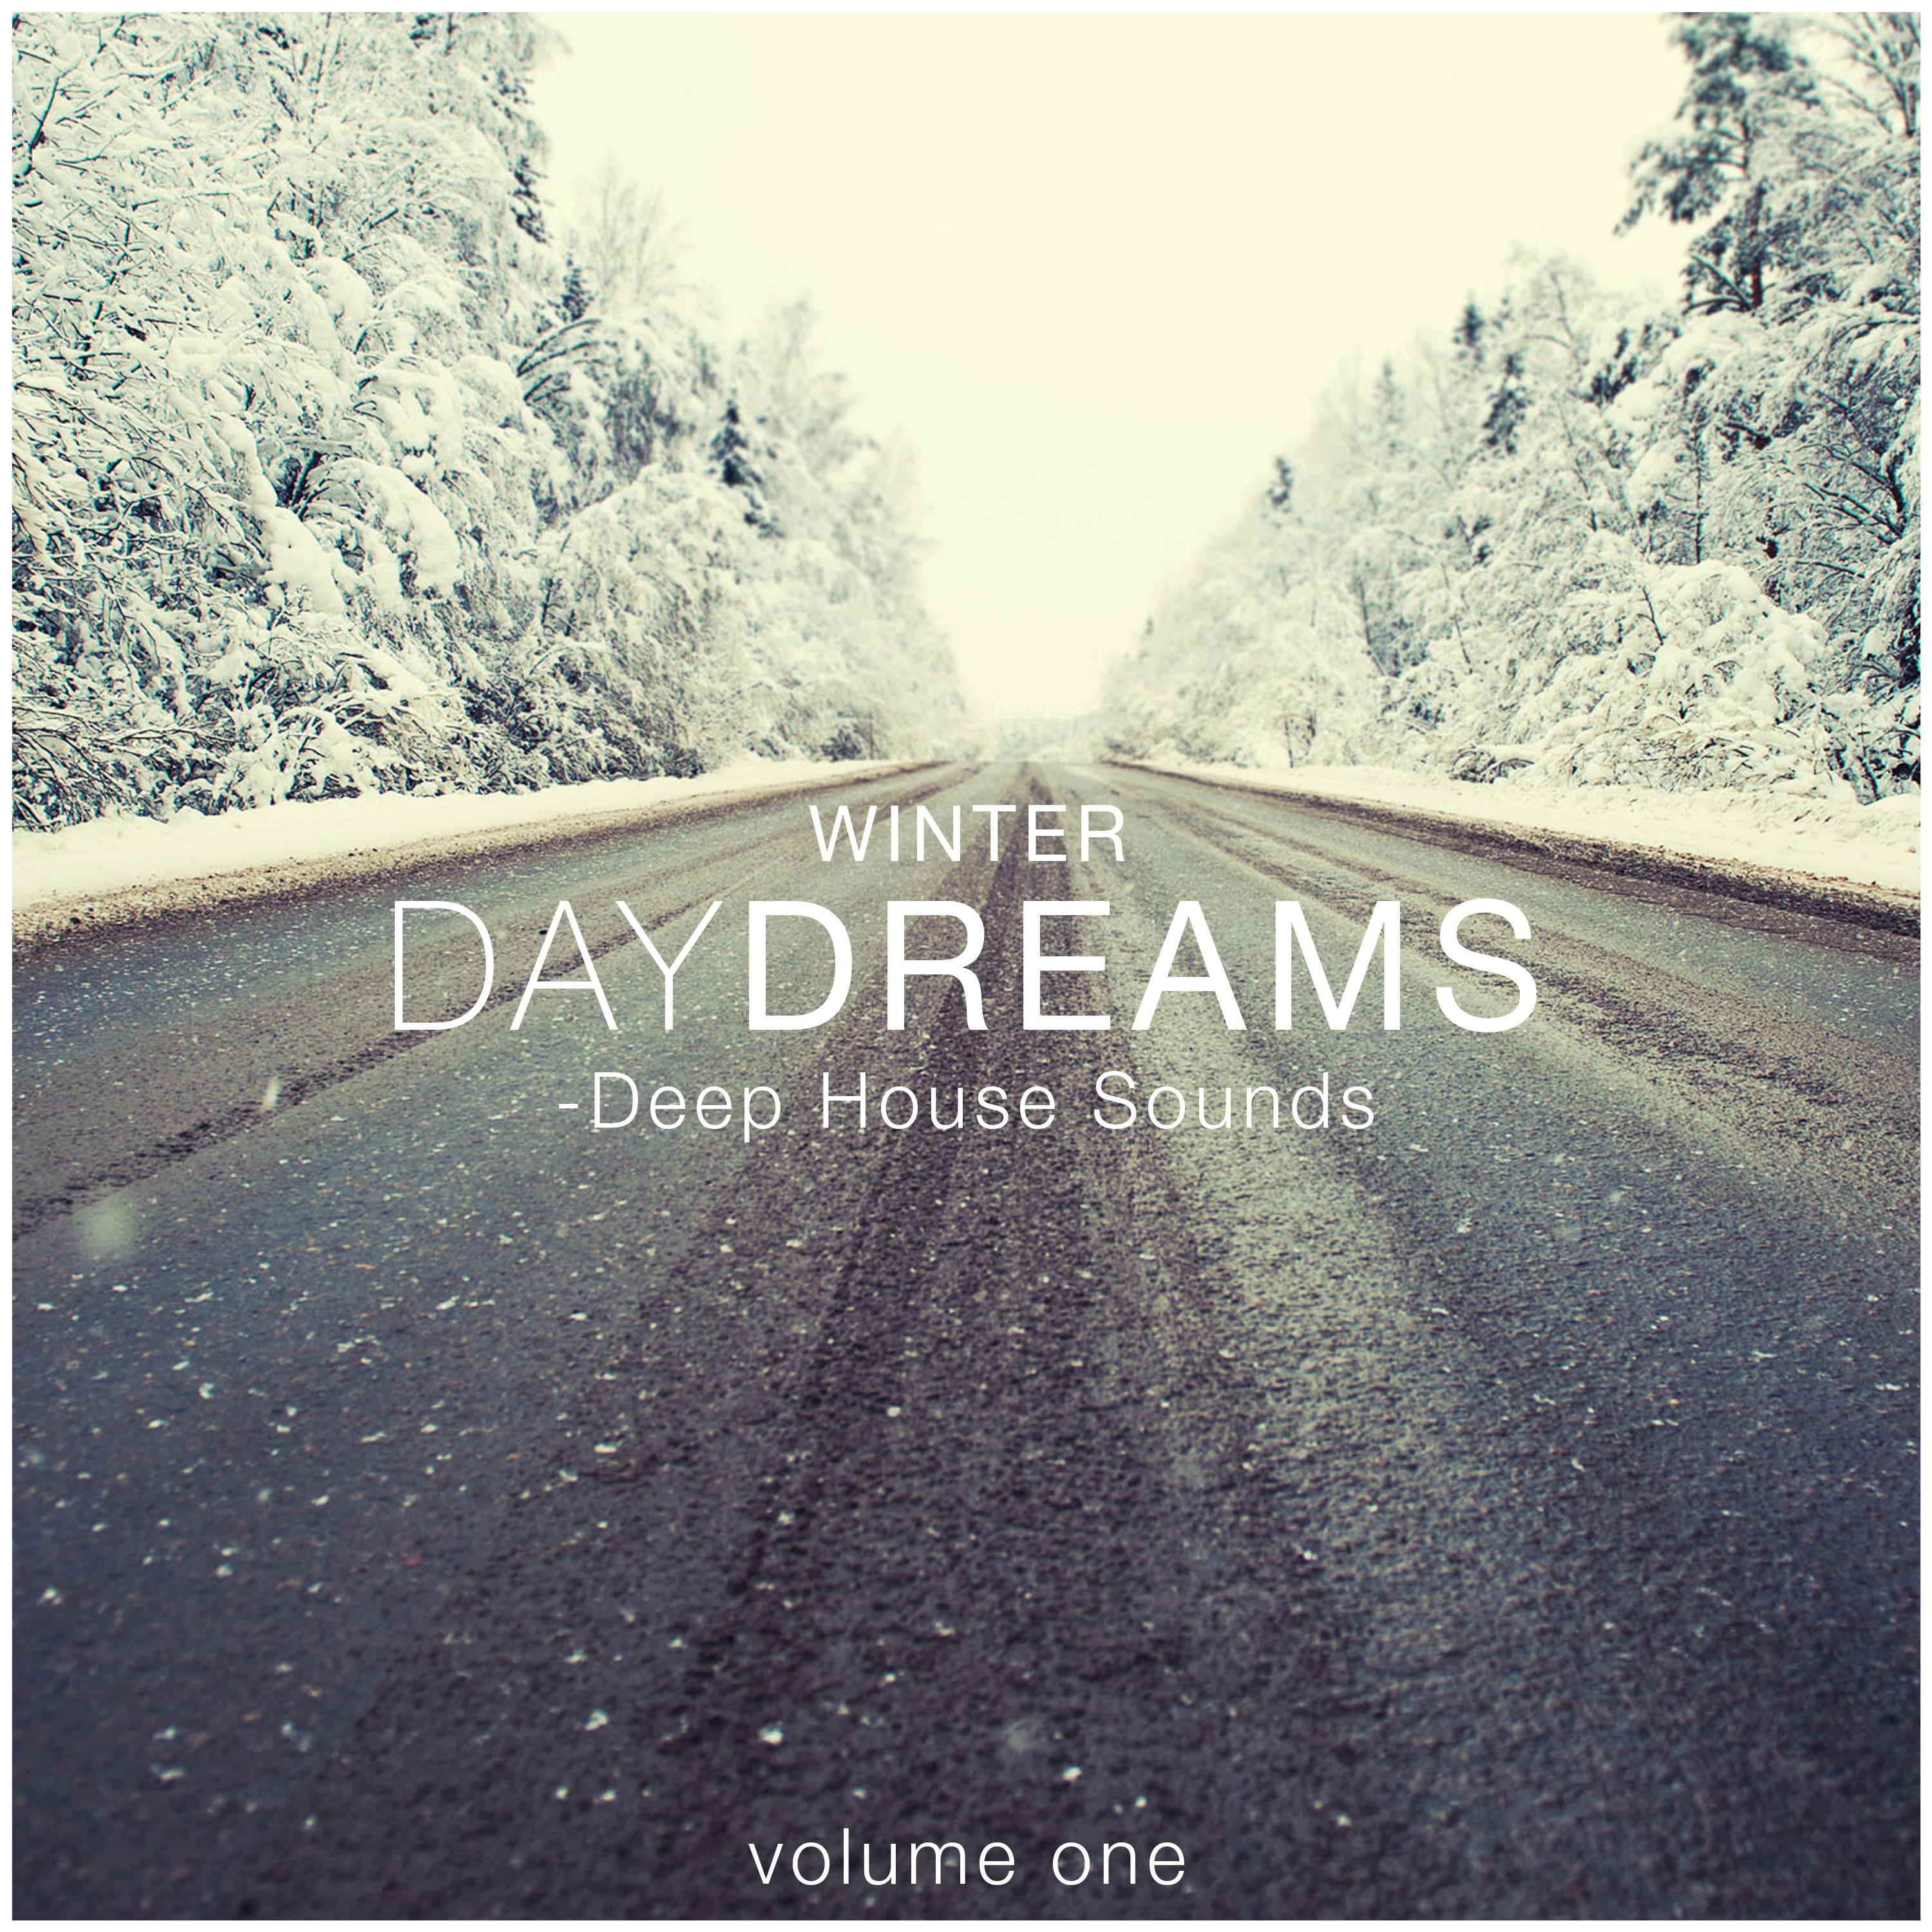 Winter Daydreams, Vol. 1 - Deep House Sounds